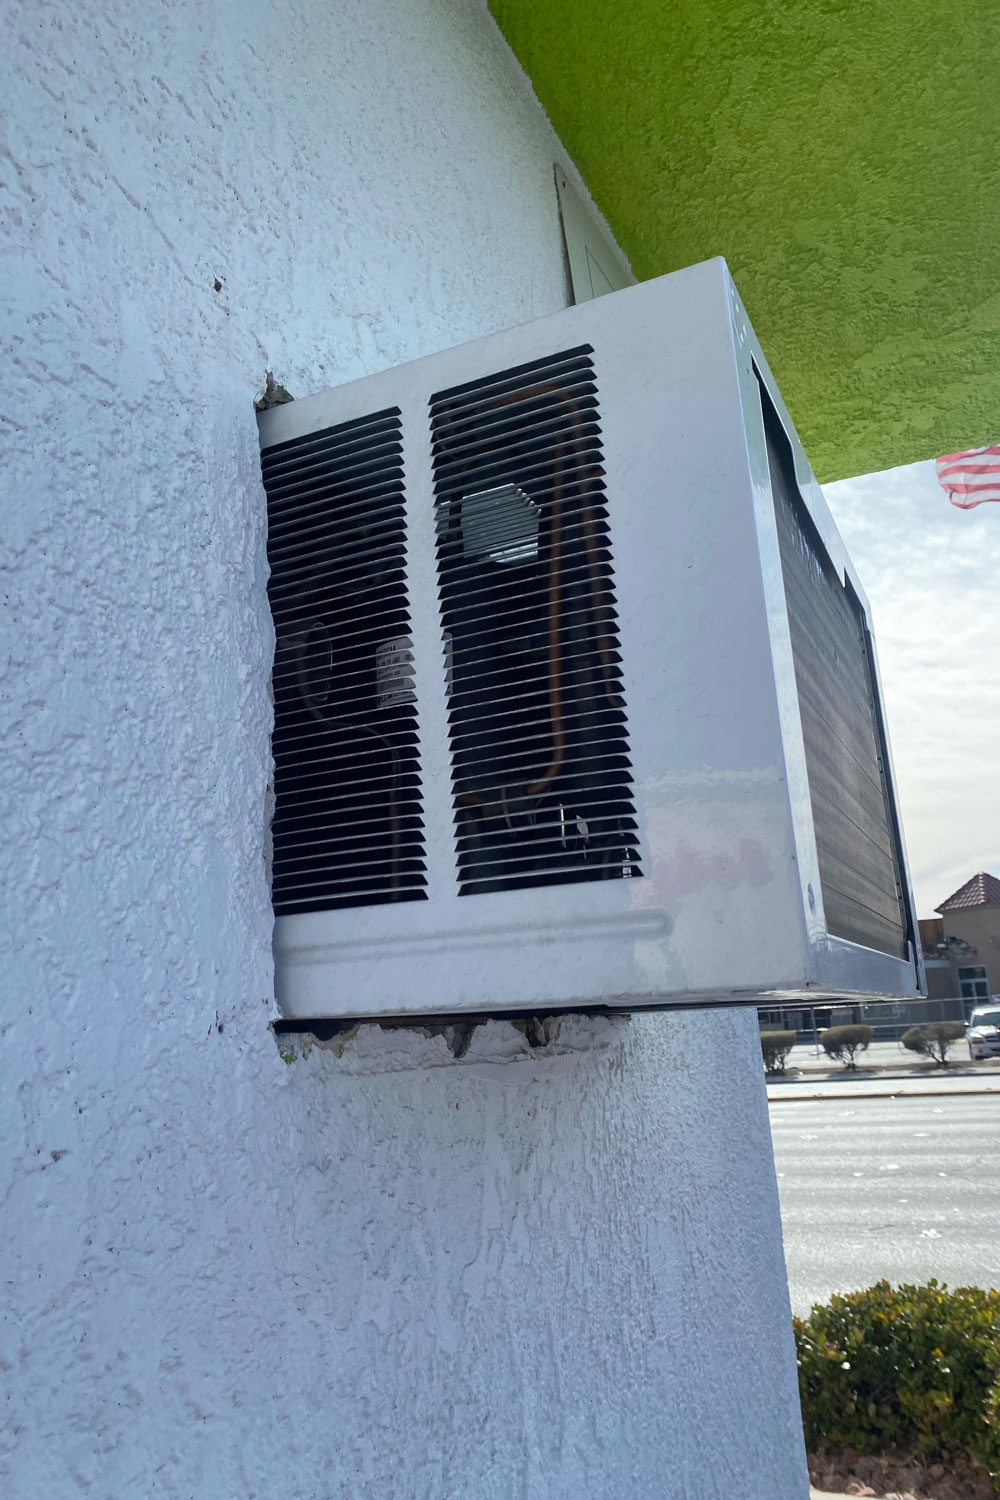 An improvised window air conditioner unit